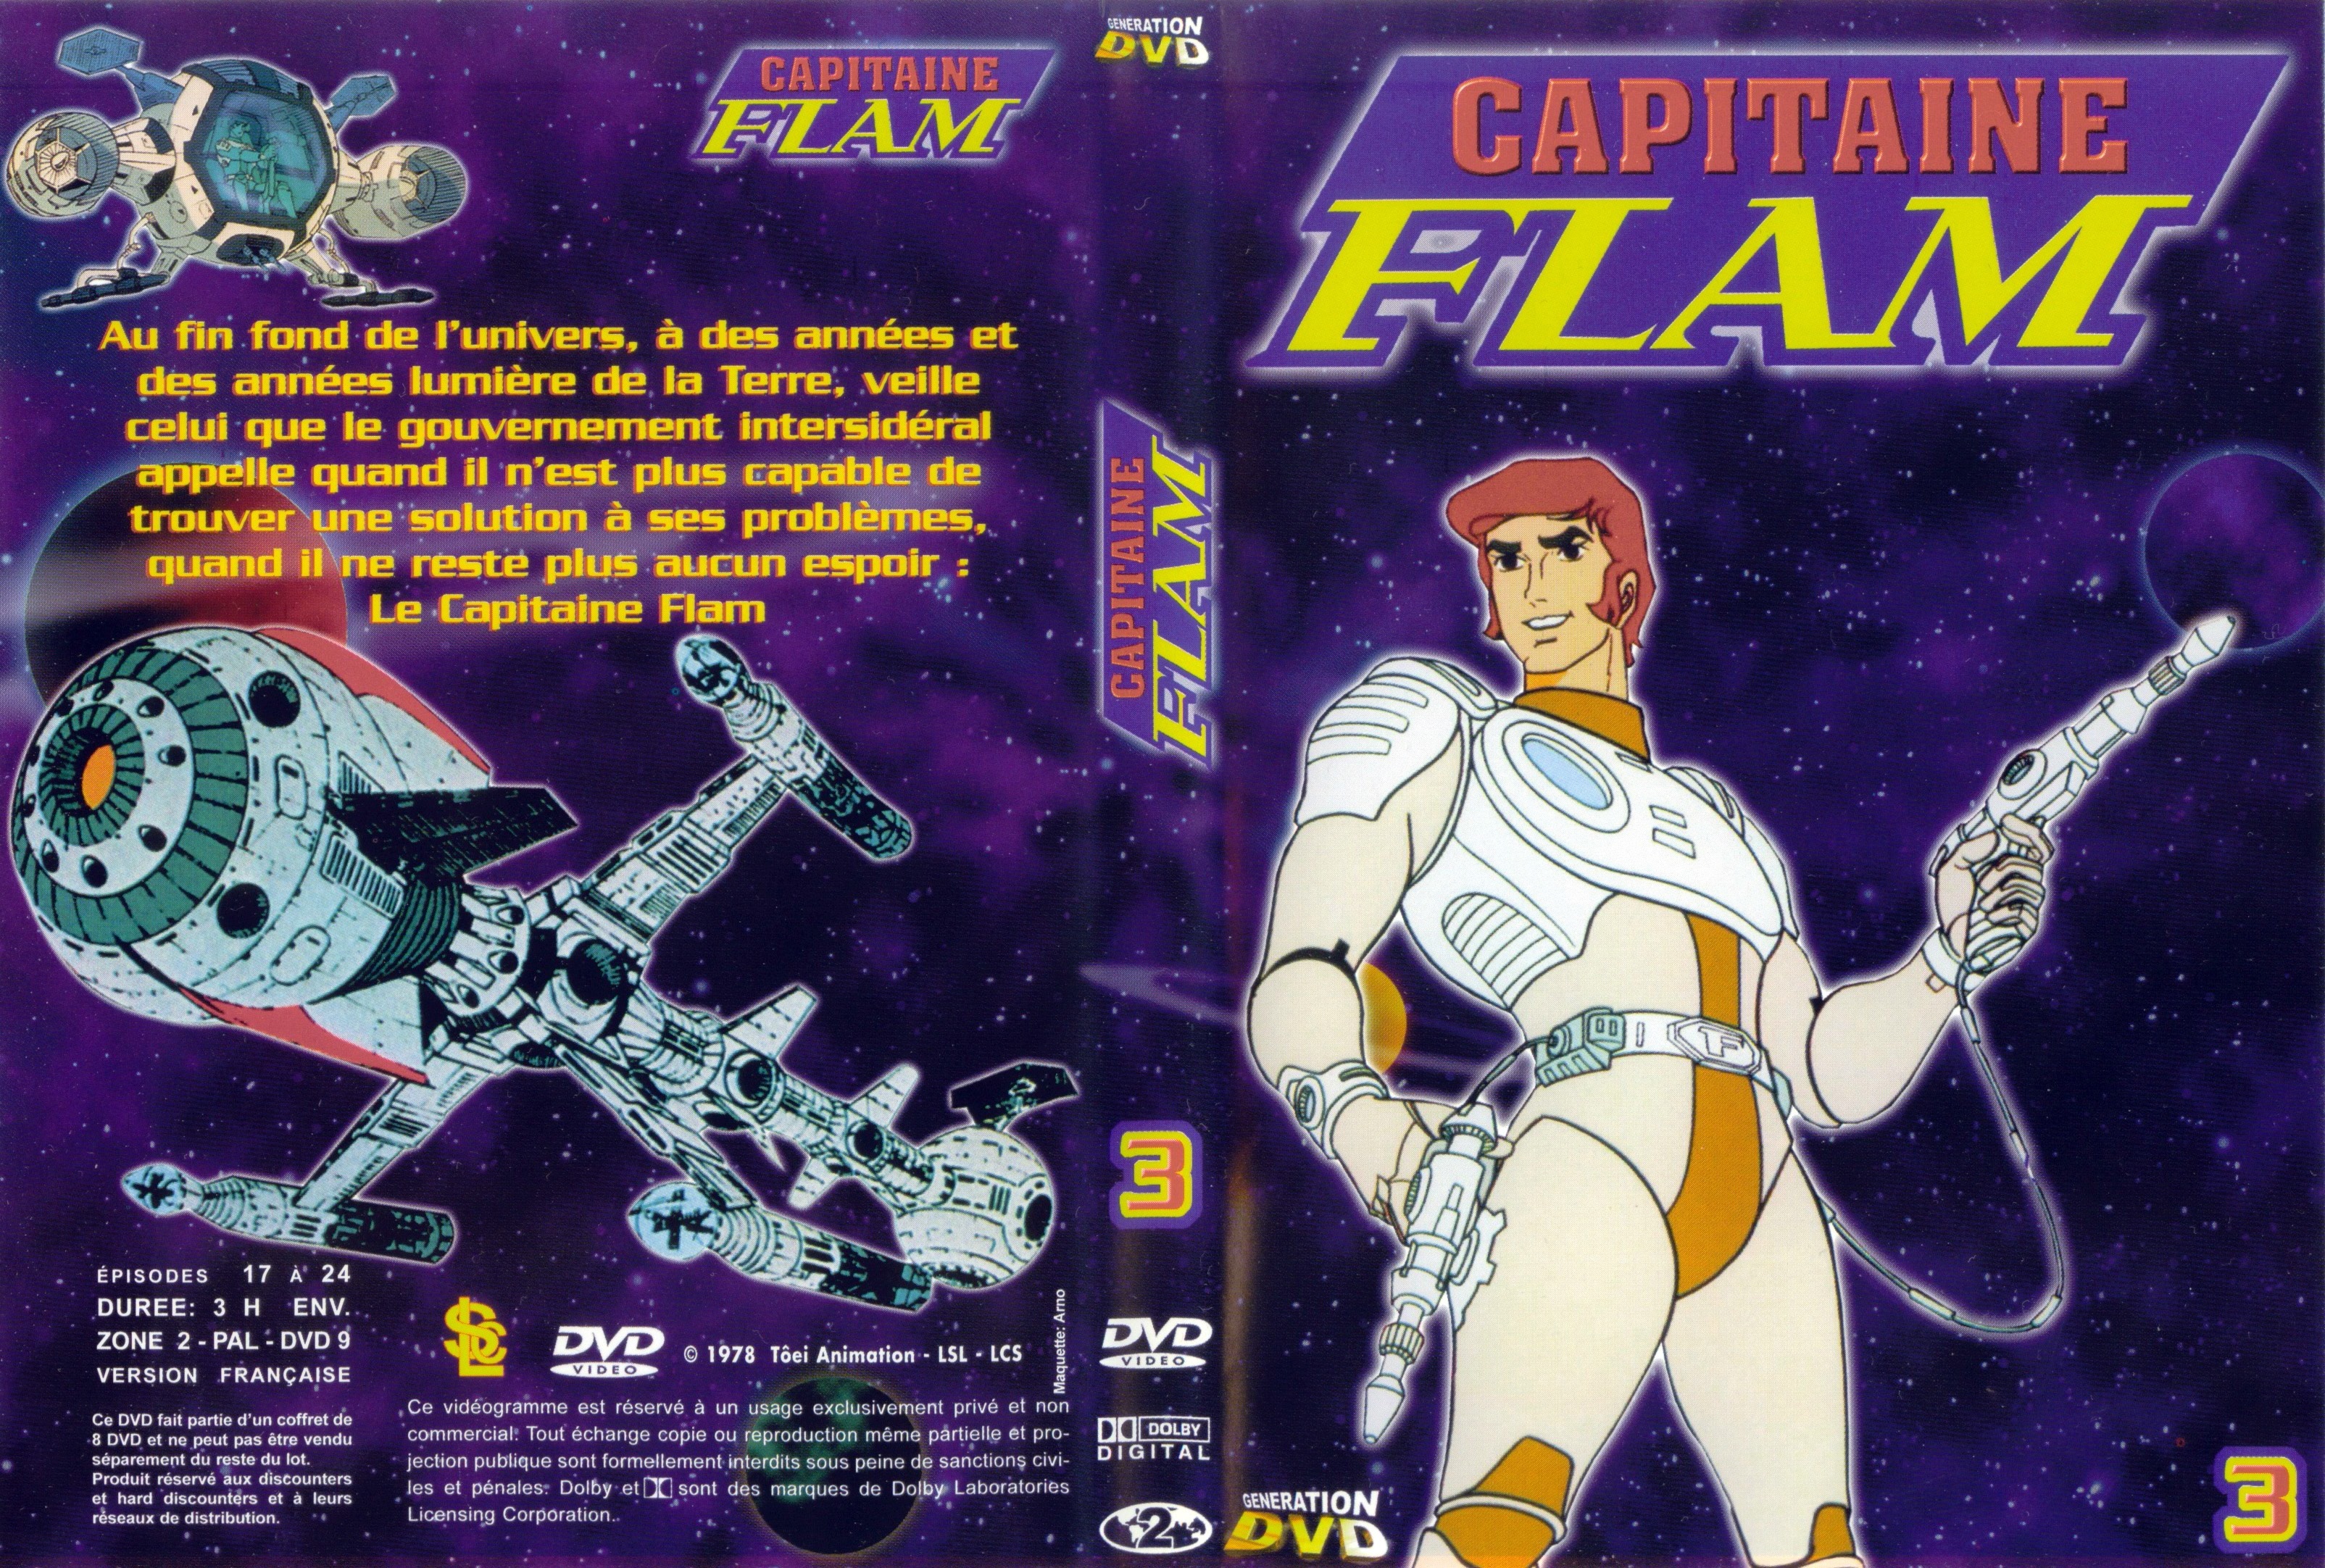 Jaquette DVD Capitaine Flam vol 3 (GENERATION DVD)